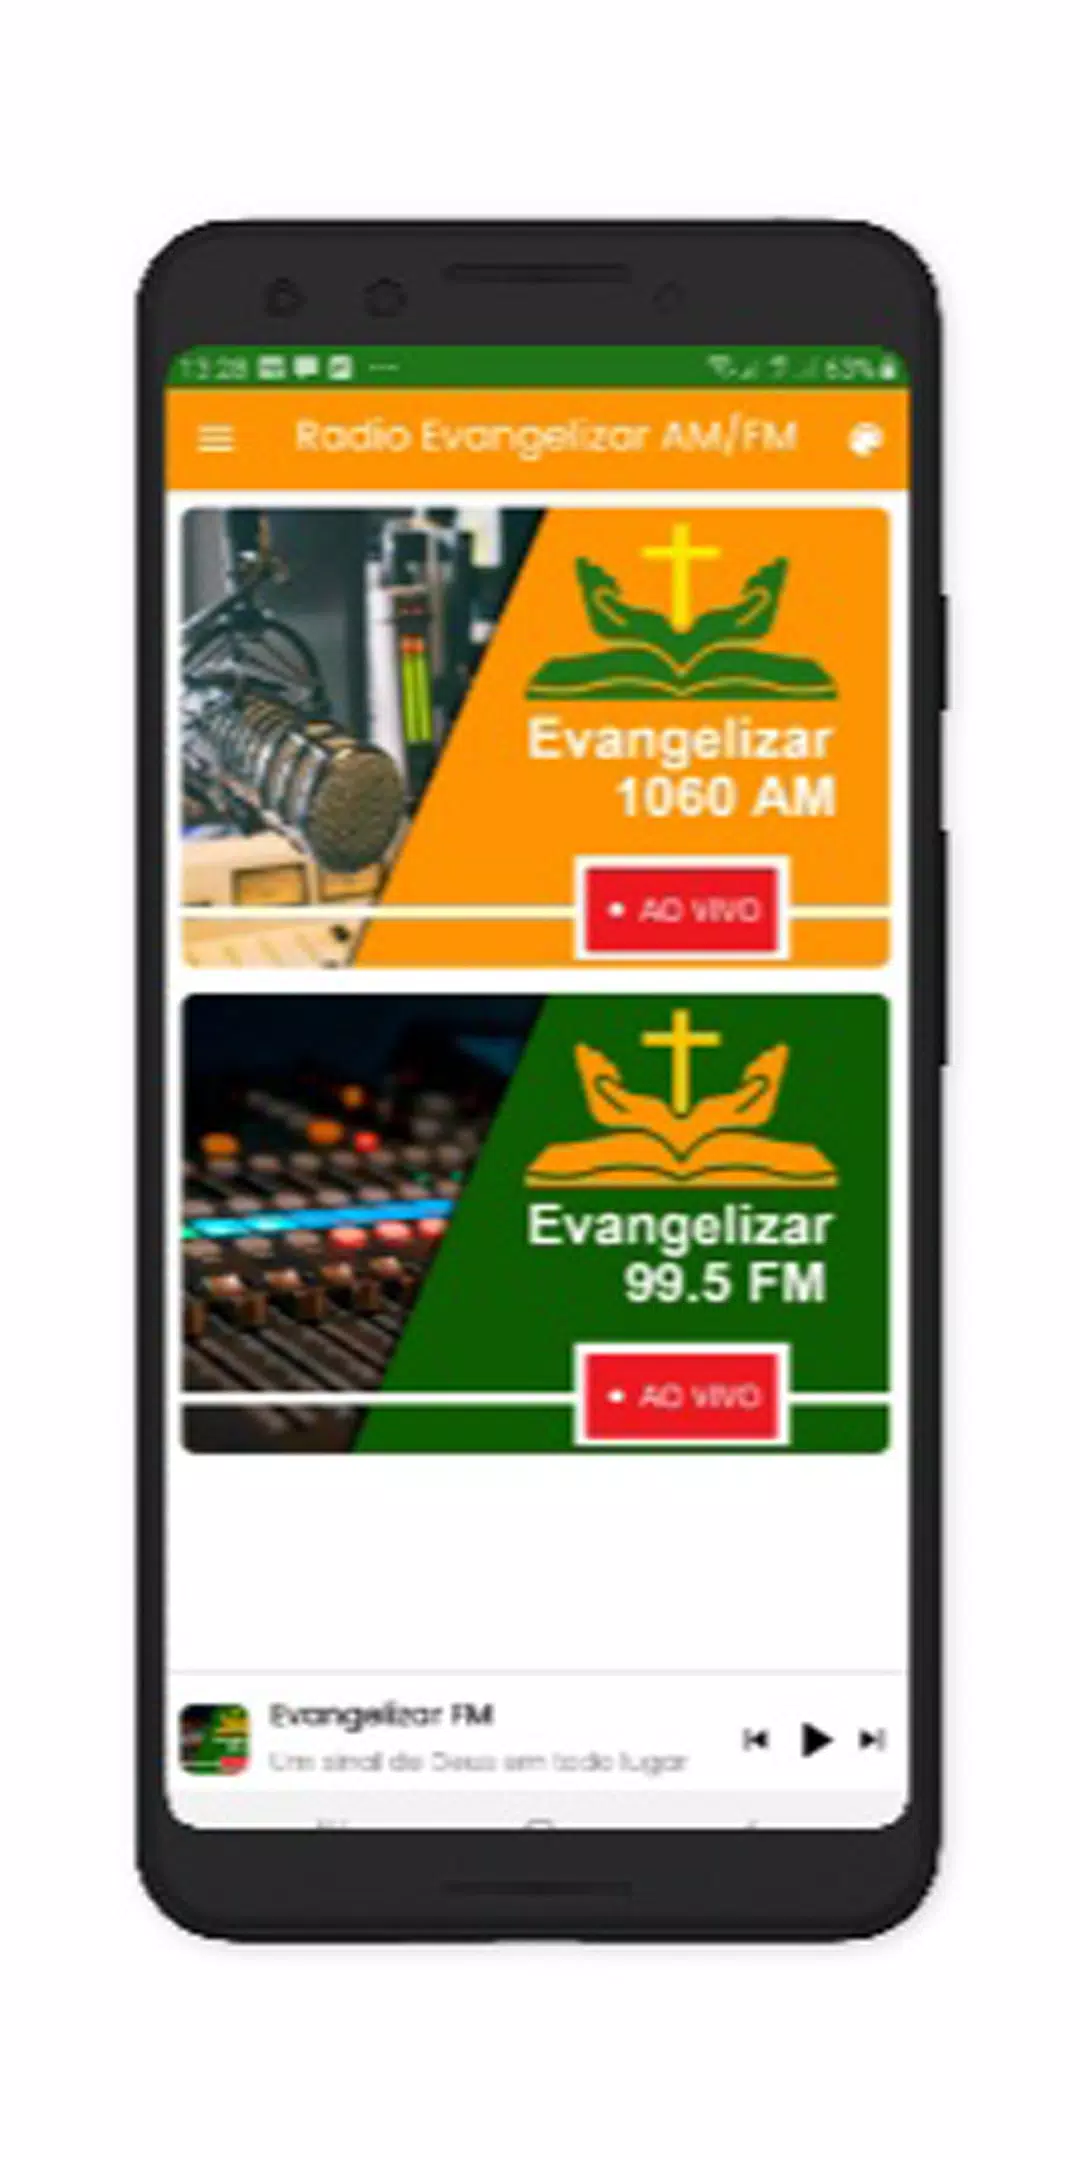 Rádio Evangelizar (AM - FM) APK voor Android Download